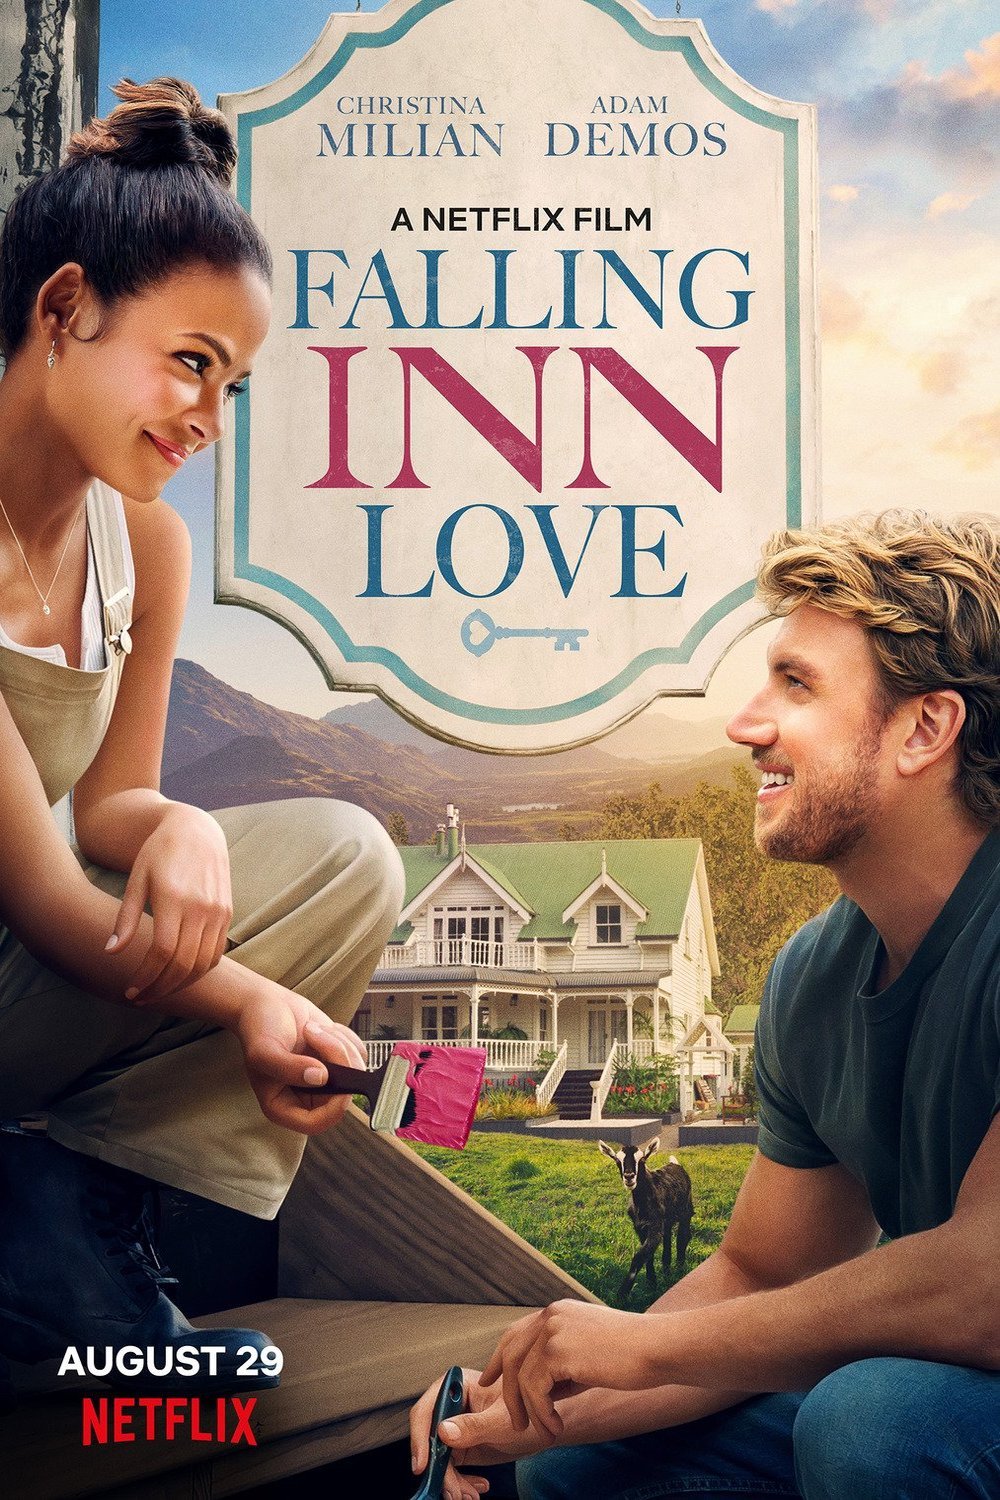 Poster of the movie Falling Inn Love